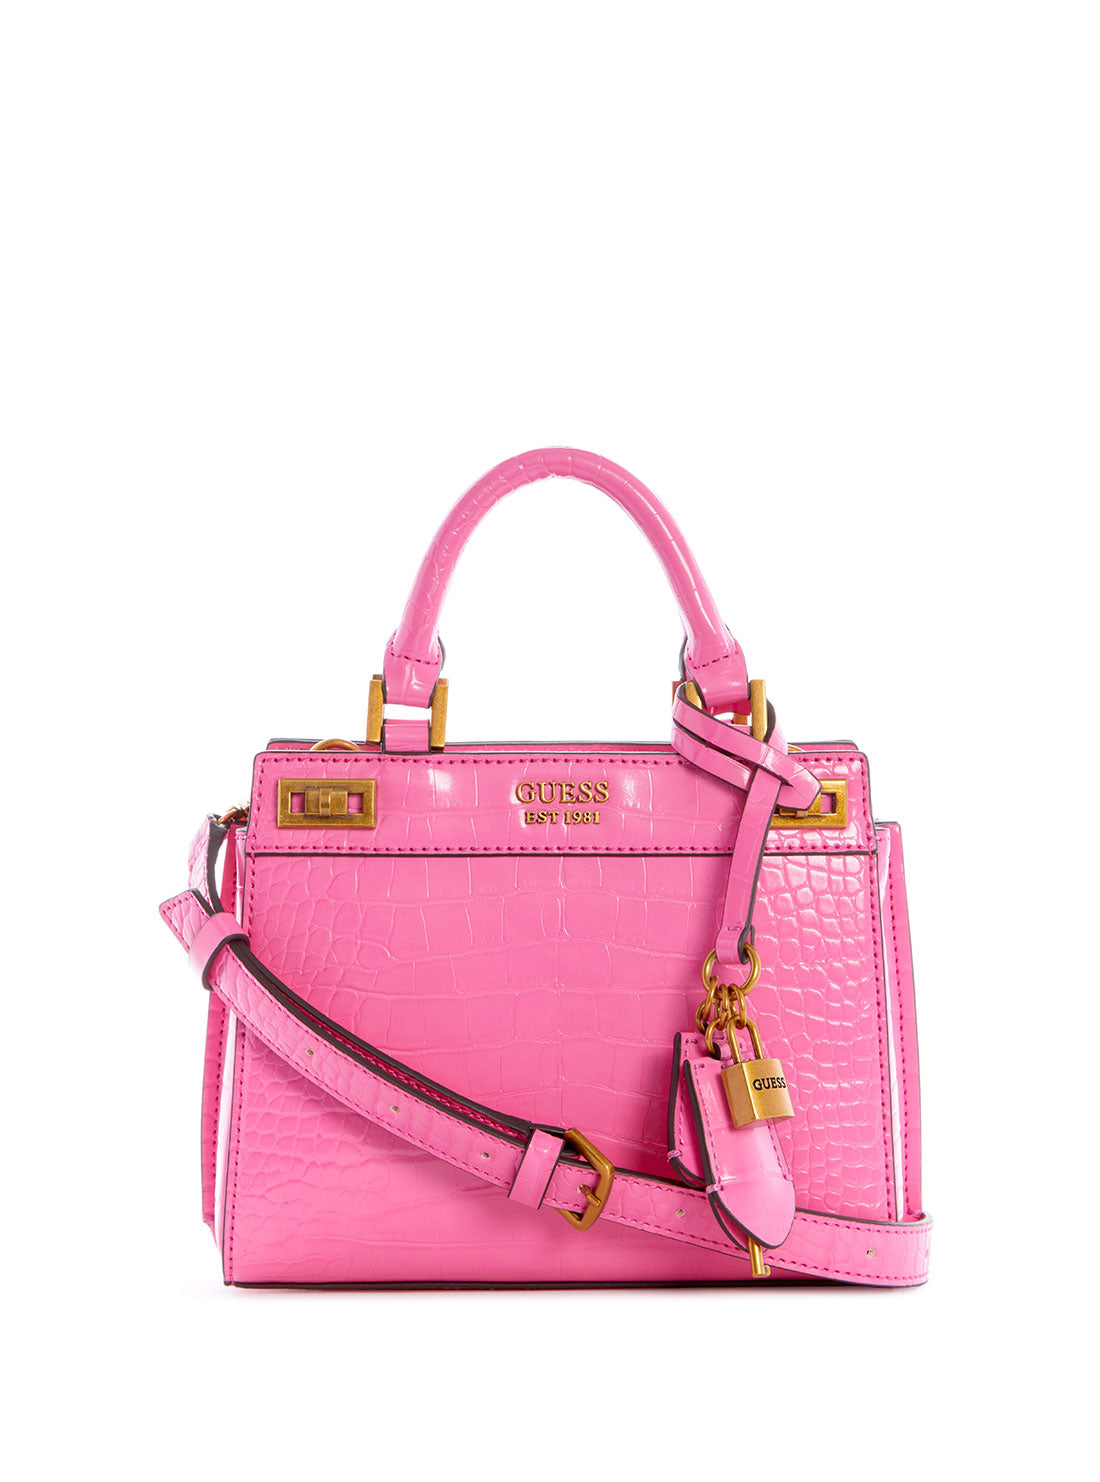 GUESS Womens Pink Katey Croc Mini Satchel Bag CB849473 Front View